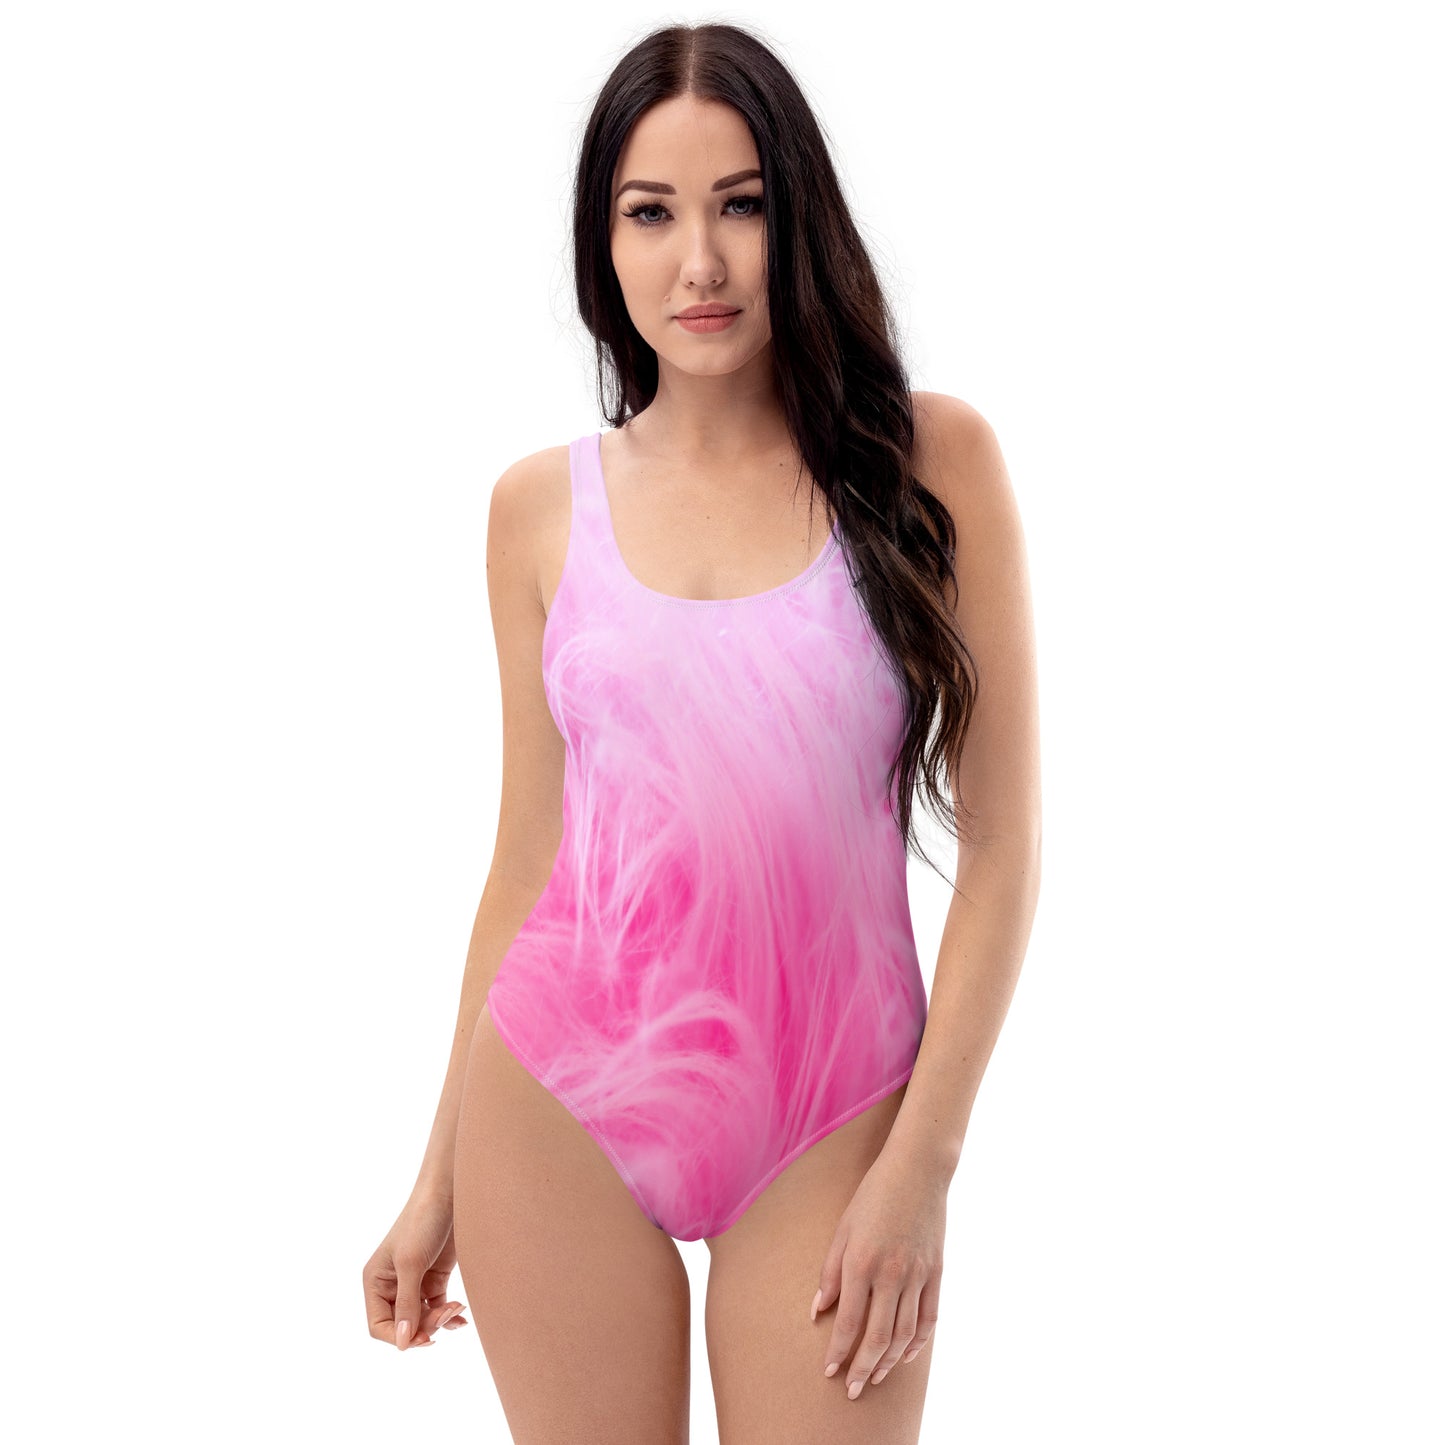 Women’s One-Piece Swimsuit - Pink Slurry